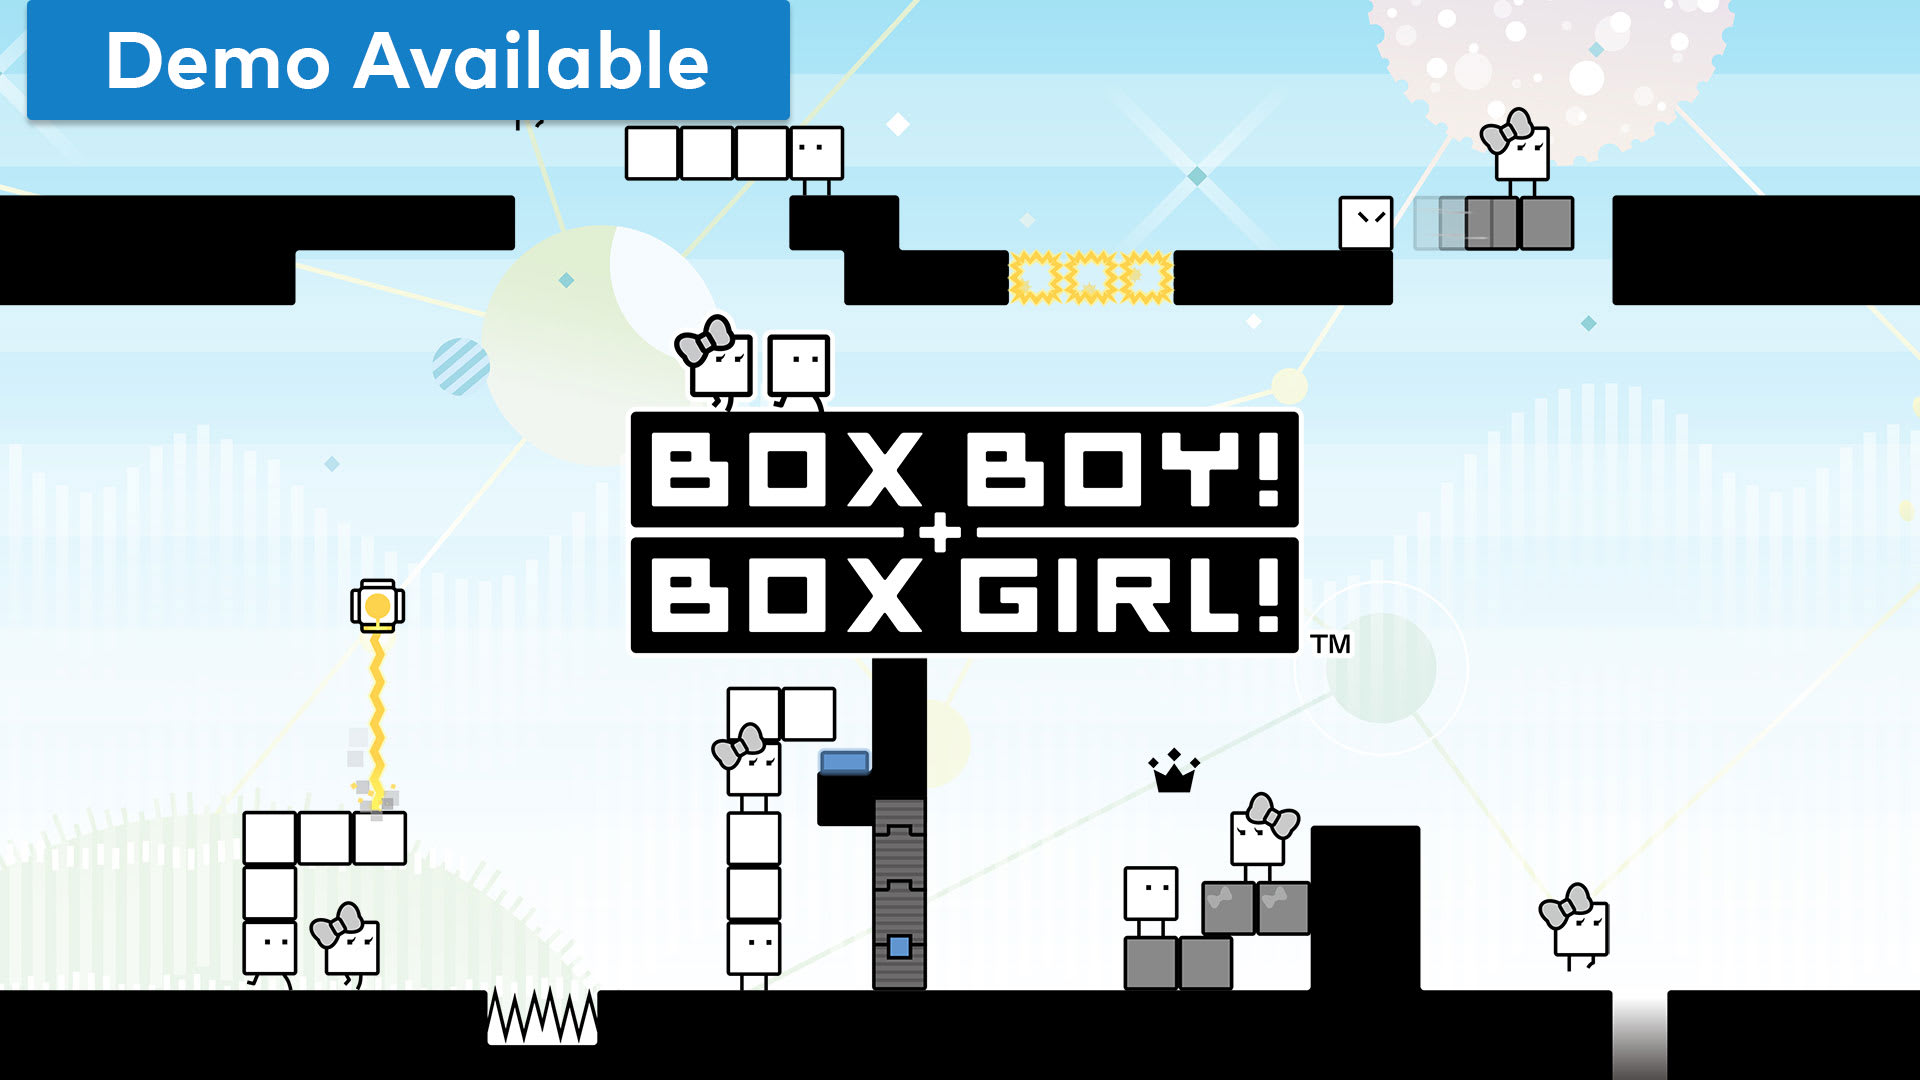 BOXBOY! + BOXGIRL!? 